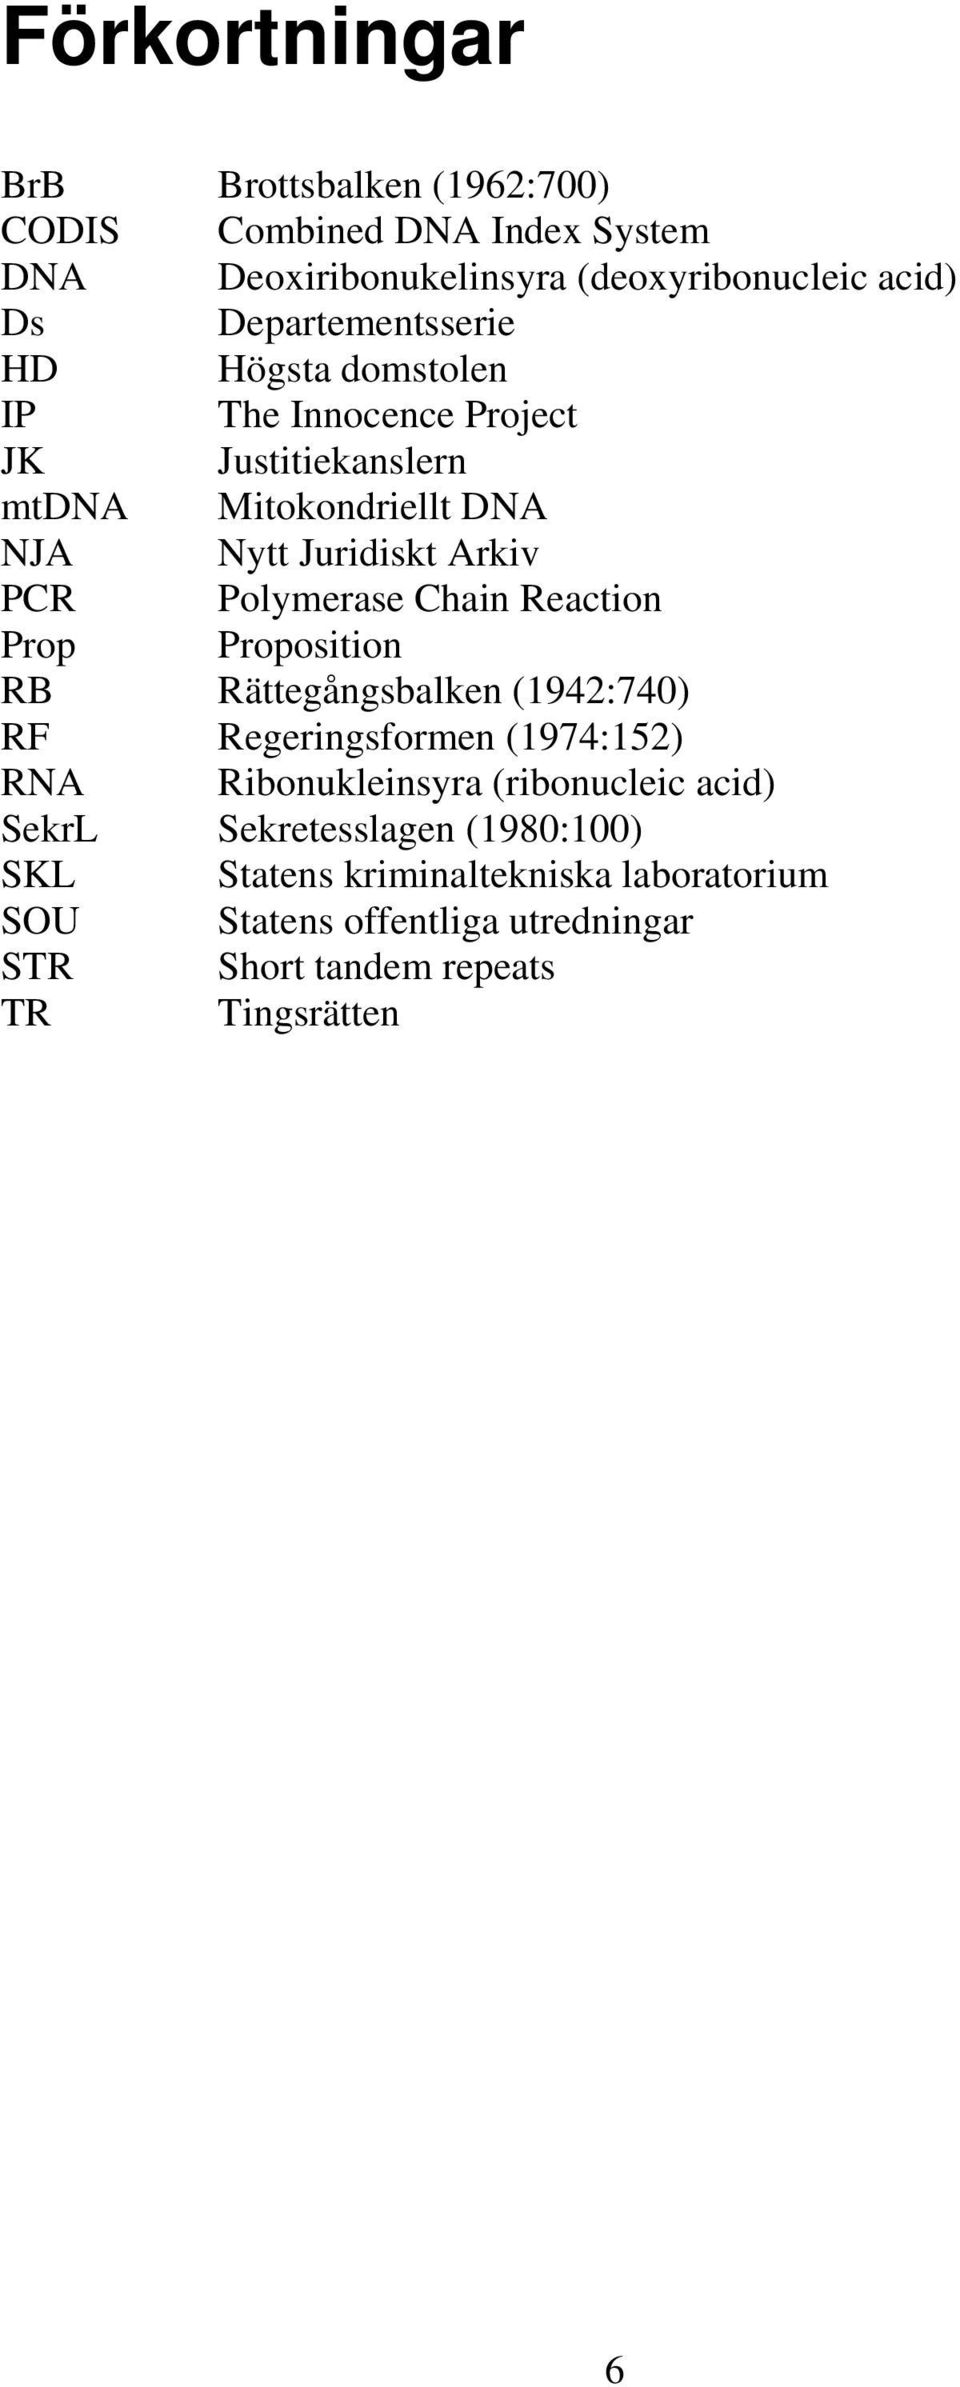 Polymerase Chain Reaction Prop Proposition RB Rättegångsbalken (1942:740) RF Regeringsformen (1974:152) RNA Ribonukleinsyra (ribonucleic